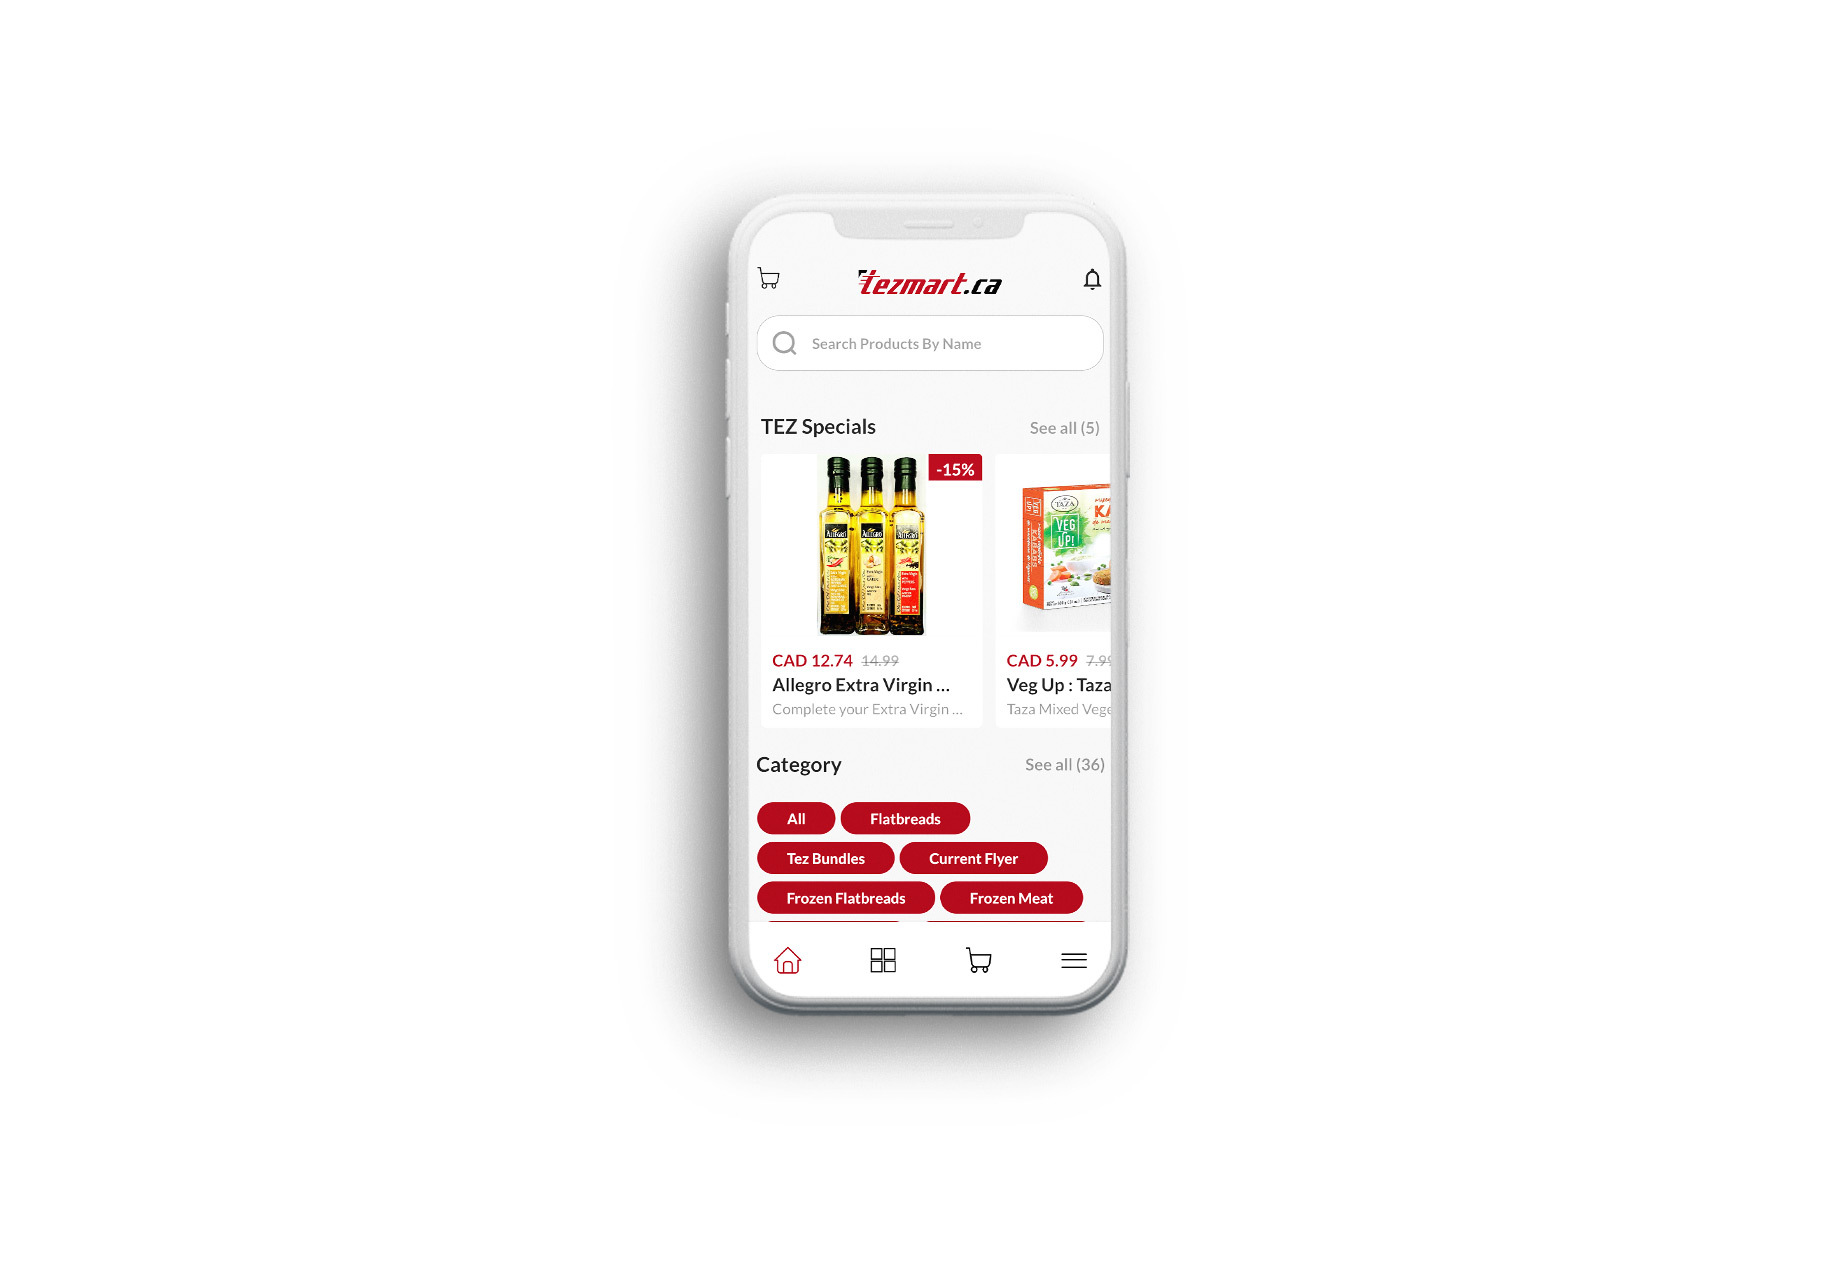 Tezmart's iOS App powered by tossdown